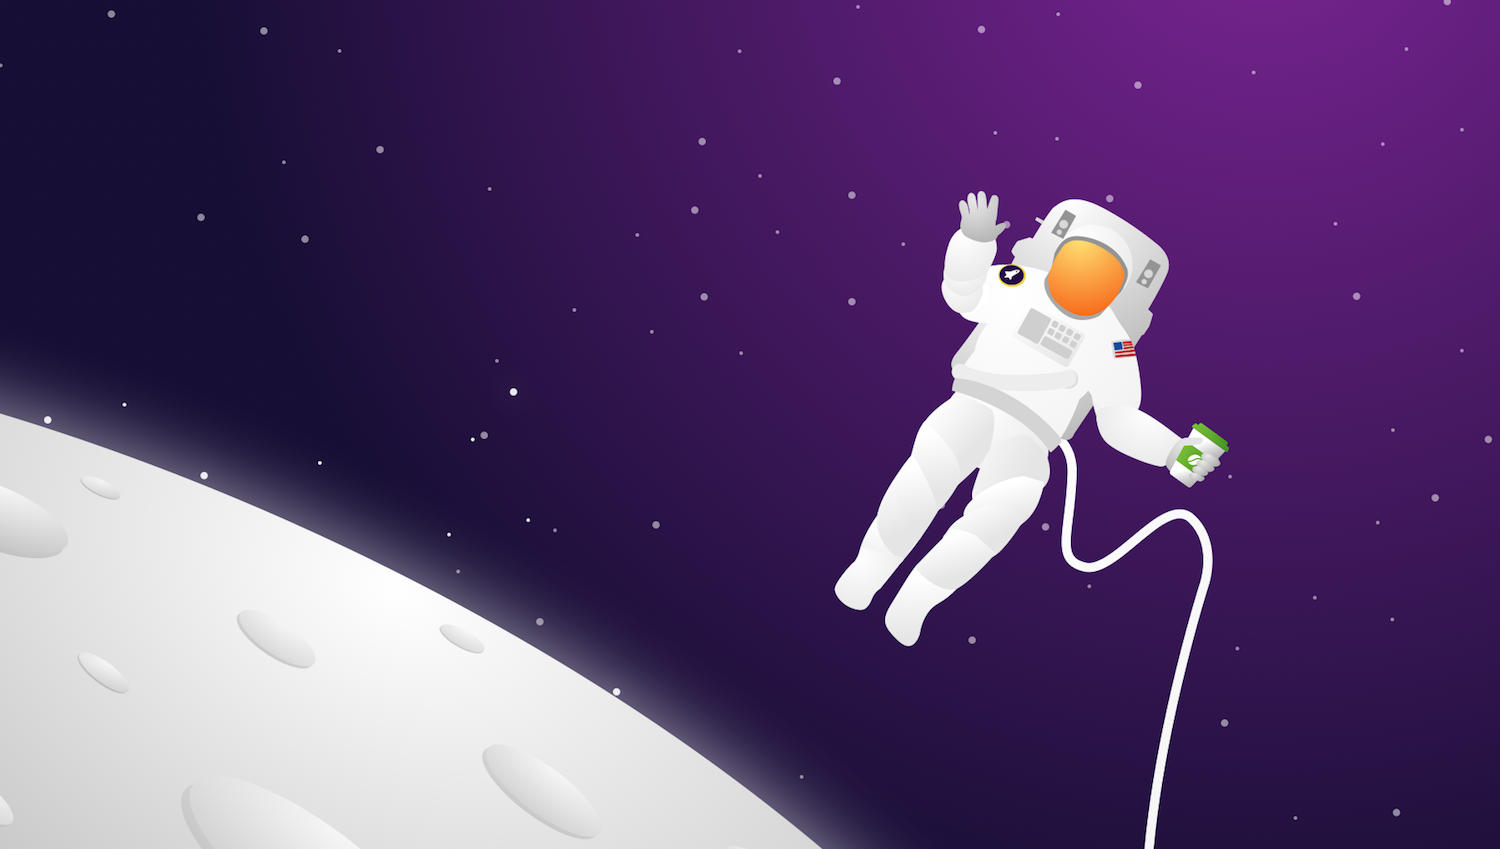 Working Astronaut by StudioLUNA - Creative Work